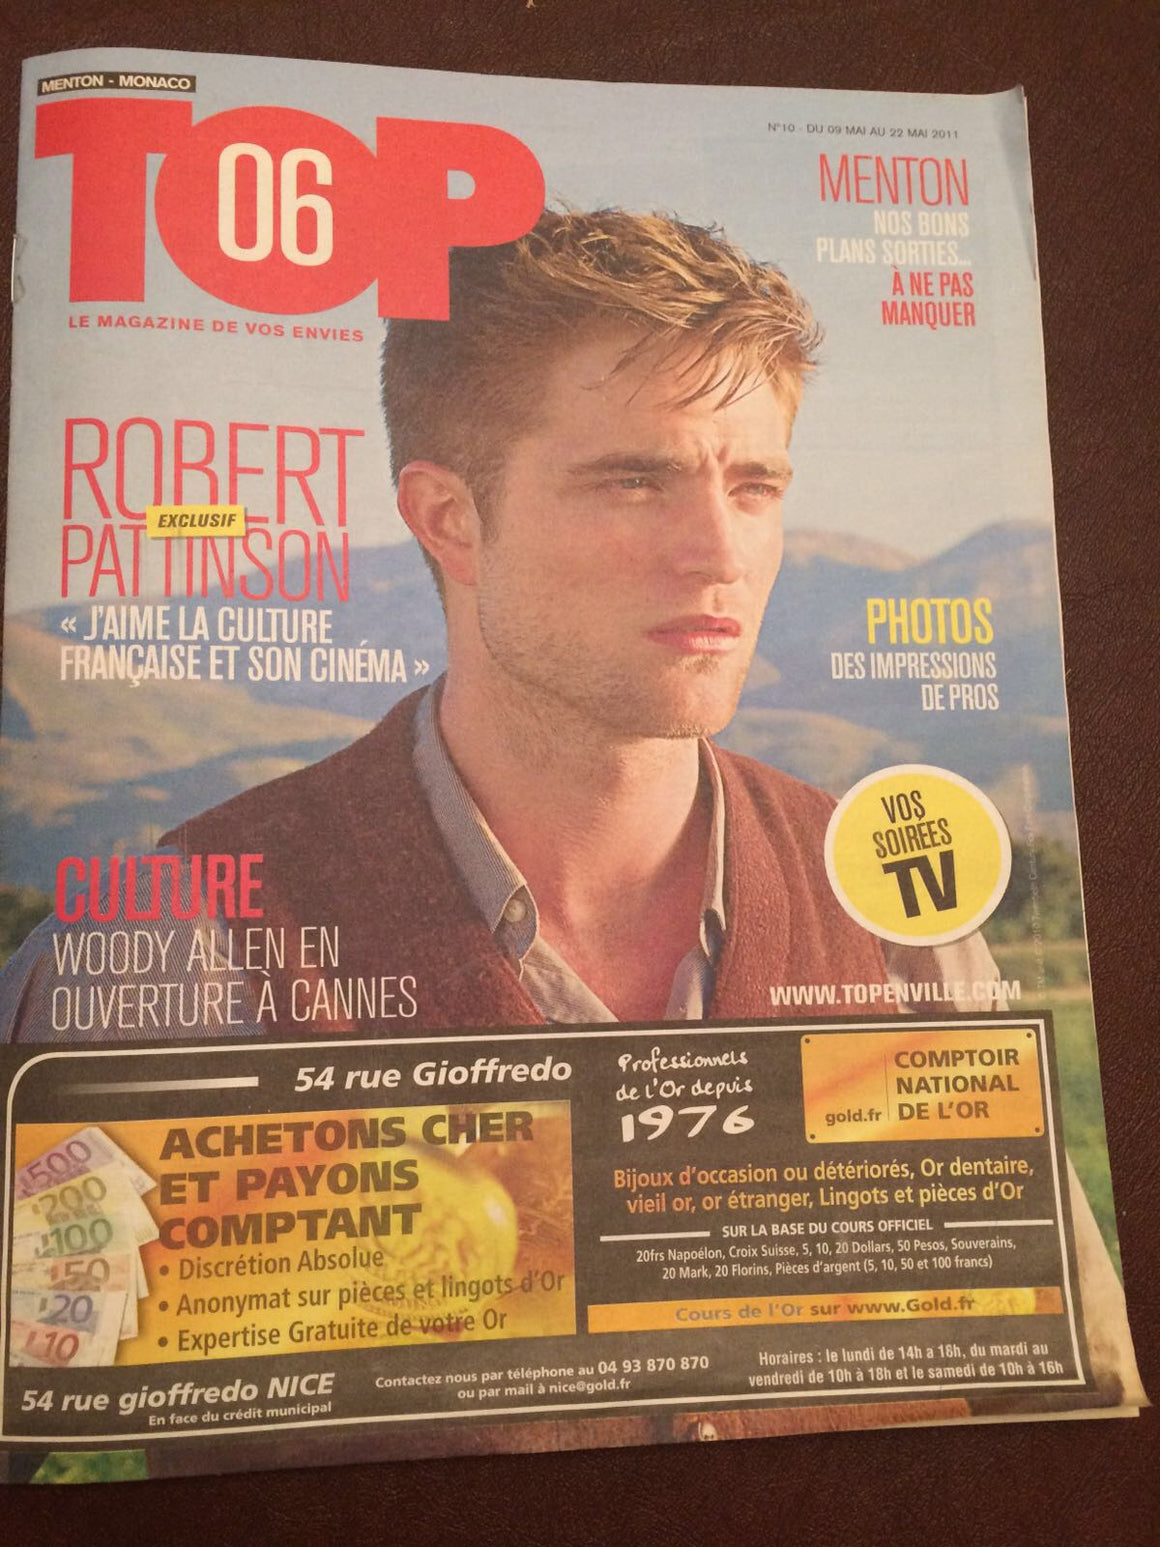 Top Monaco Magazine May 2011 Robert Pattinson Cover